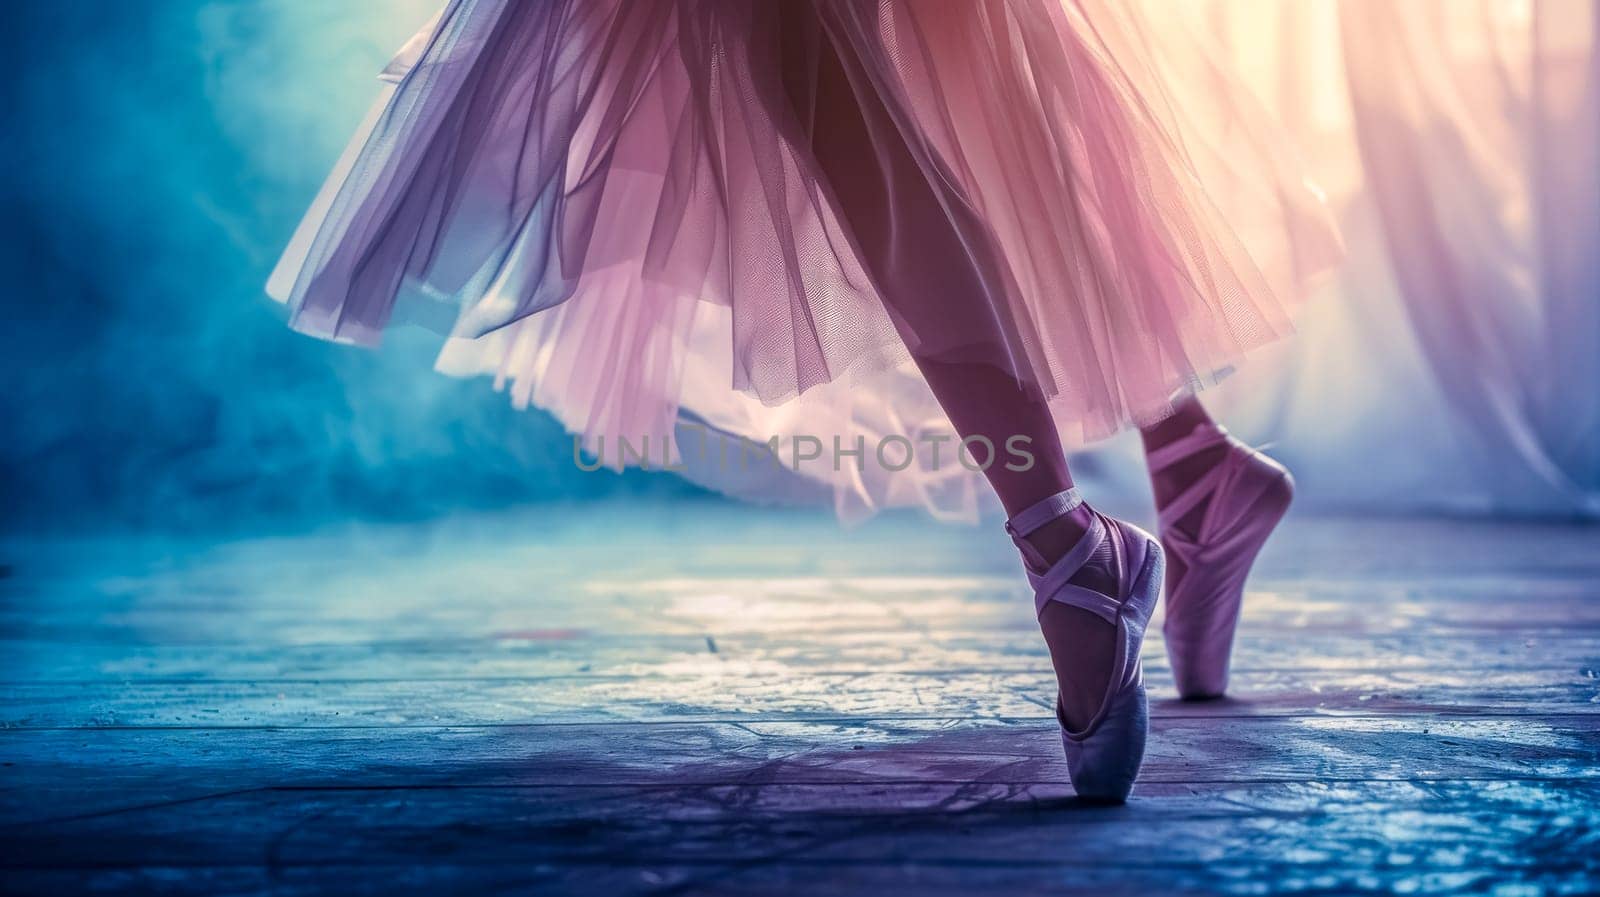 Close-up of a dancer's feet en pointe in a tutu skirt during a ballet performance